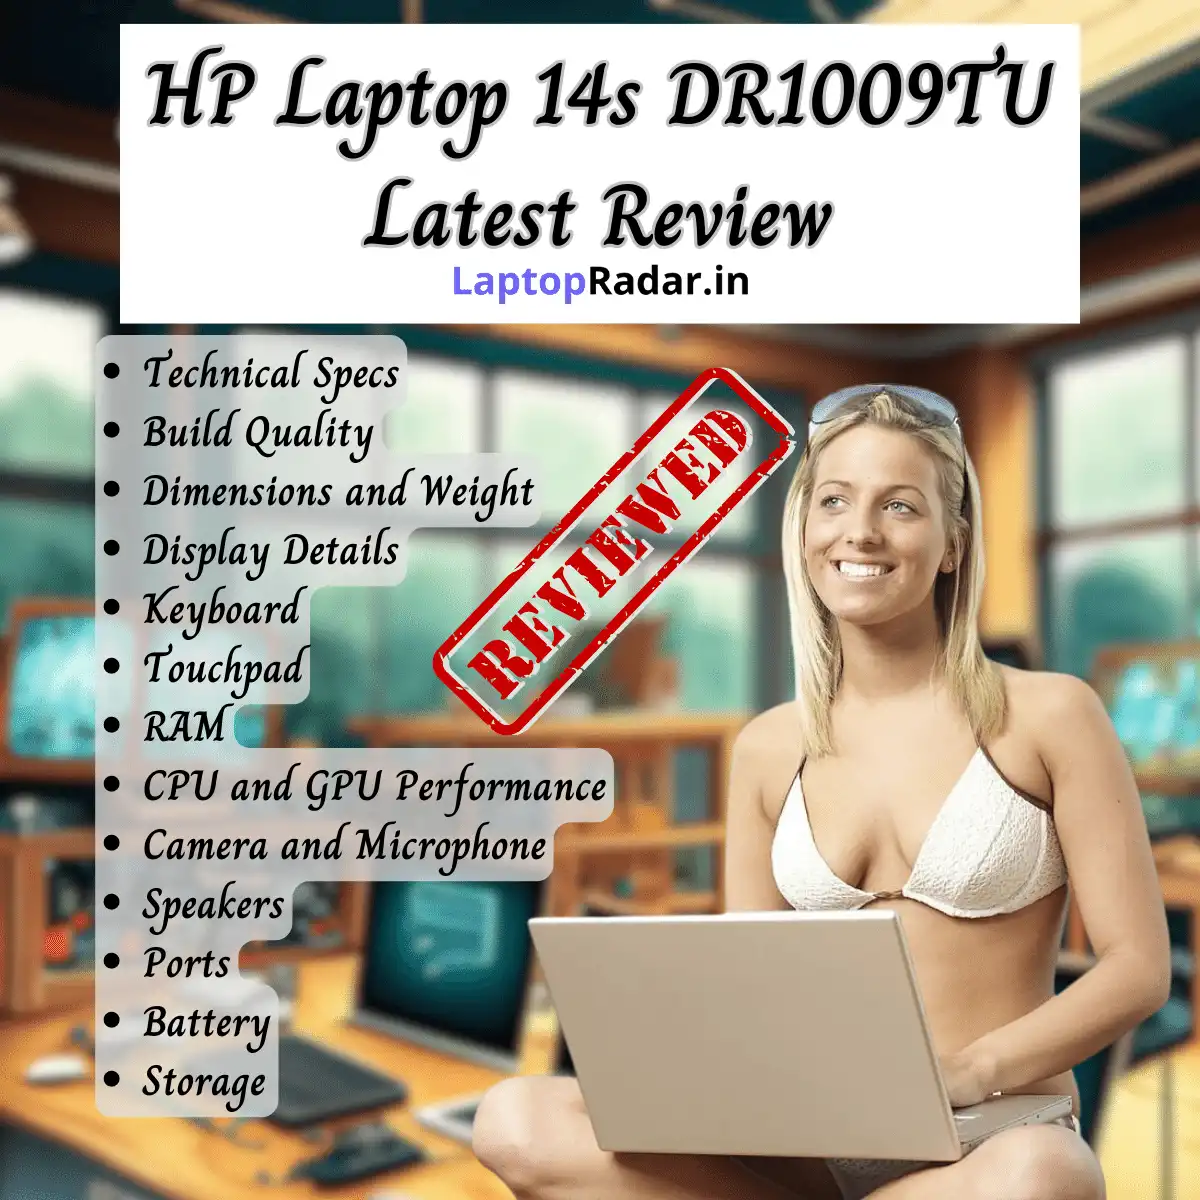 HP 14s DR1009TU Technical Specs | HP Laptop | HP 14s Laptop | HP laptop 14s | HP 14s DR1009tu | HP 14s DR1009tu LAptop | HP 14s laptop DR1009tu